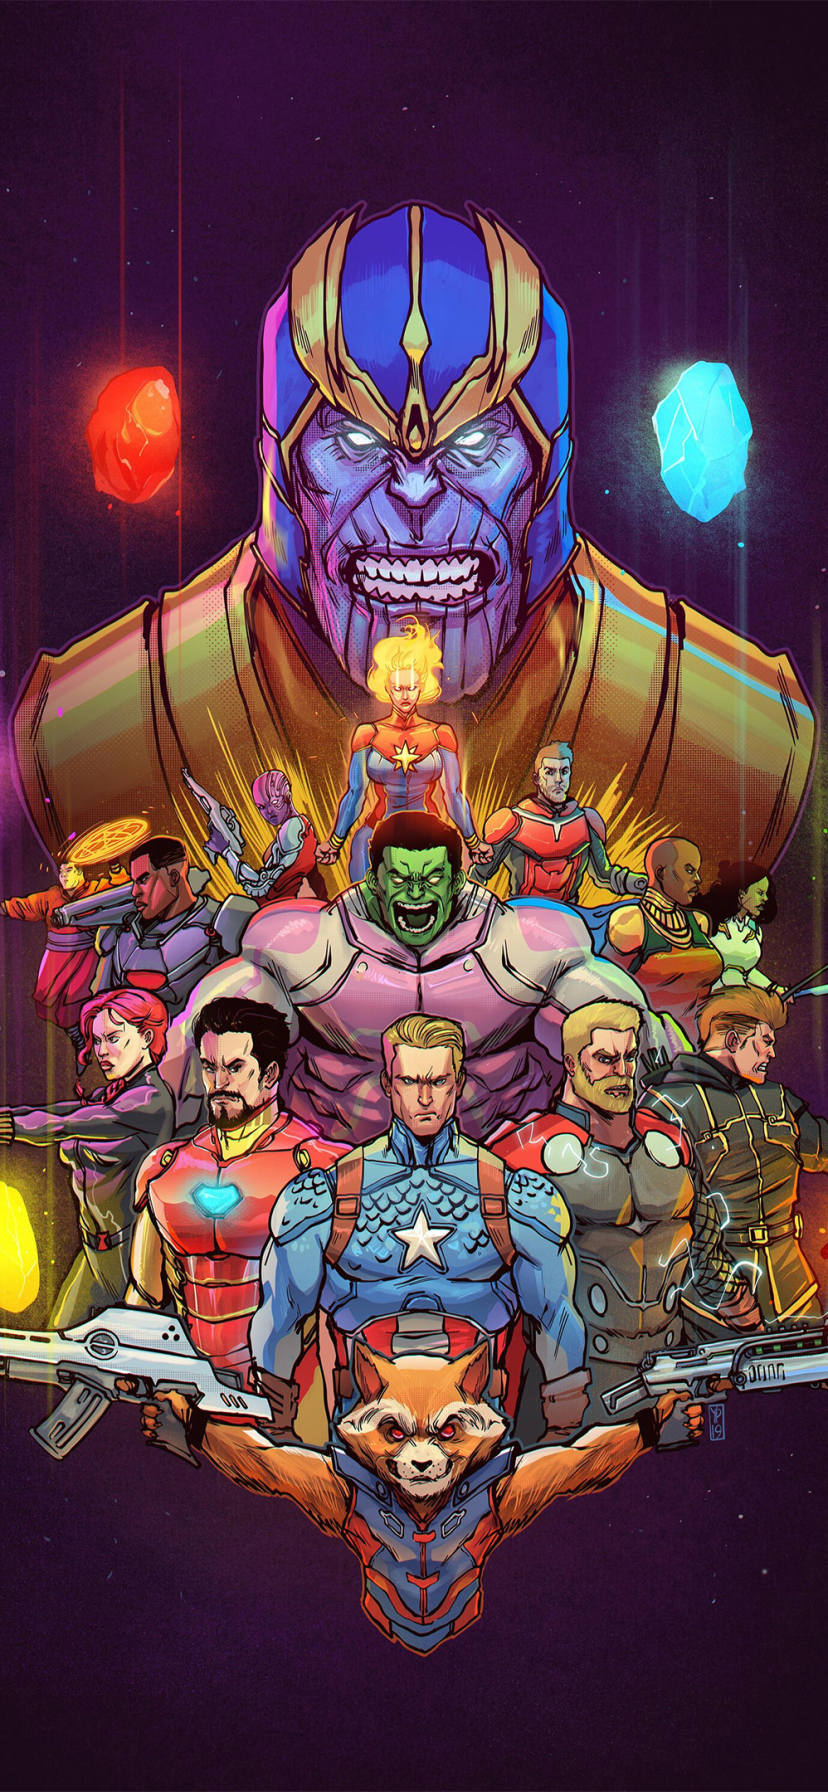 Download mobile wallpaper Hulk, Iron Man, Captain America, Movie, Captain Marvel, Thor, Black Widow, Hawkeye, The Avengers, Rocket Raccoon, Ant Man, Thanos, Nebula (Marvel Comics), Avengers Endgame for free.